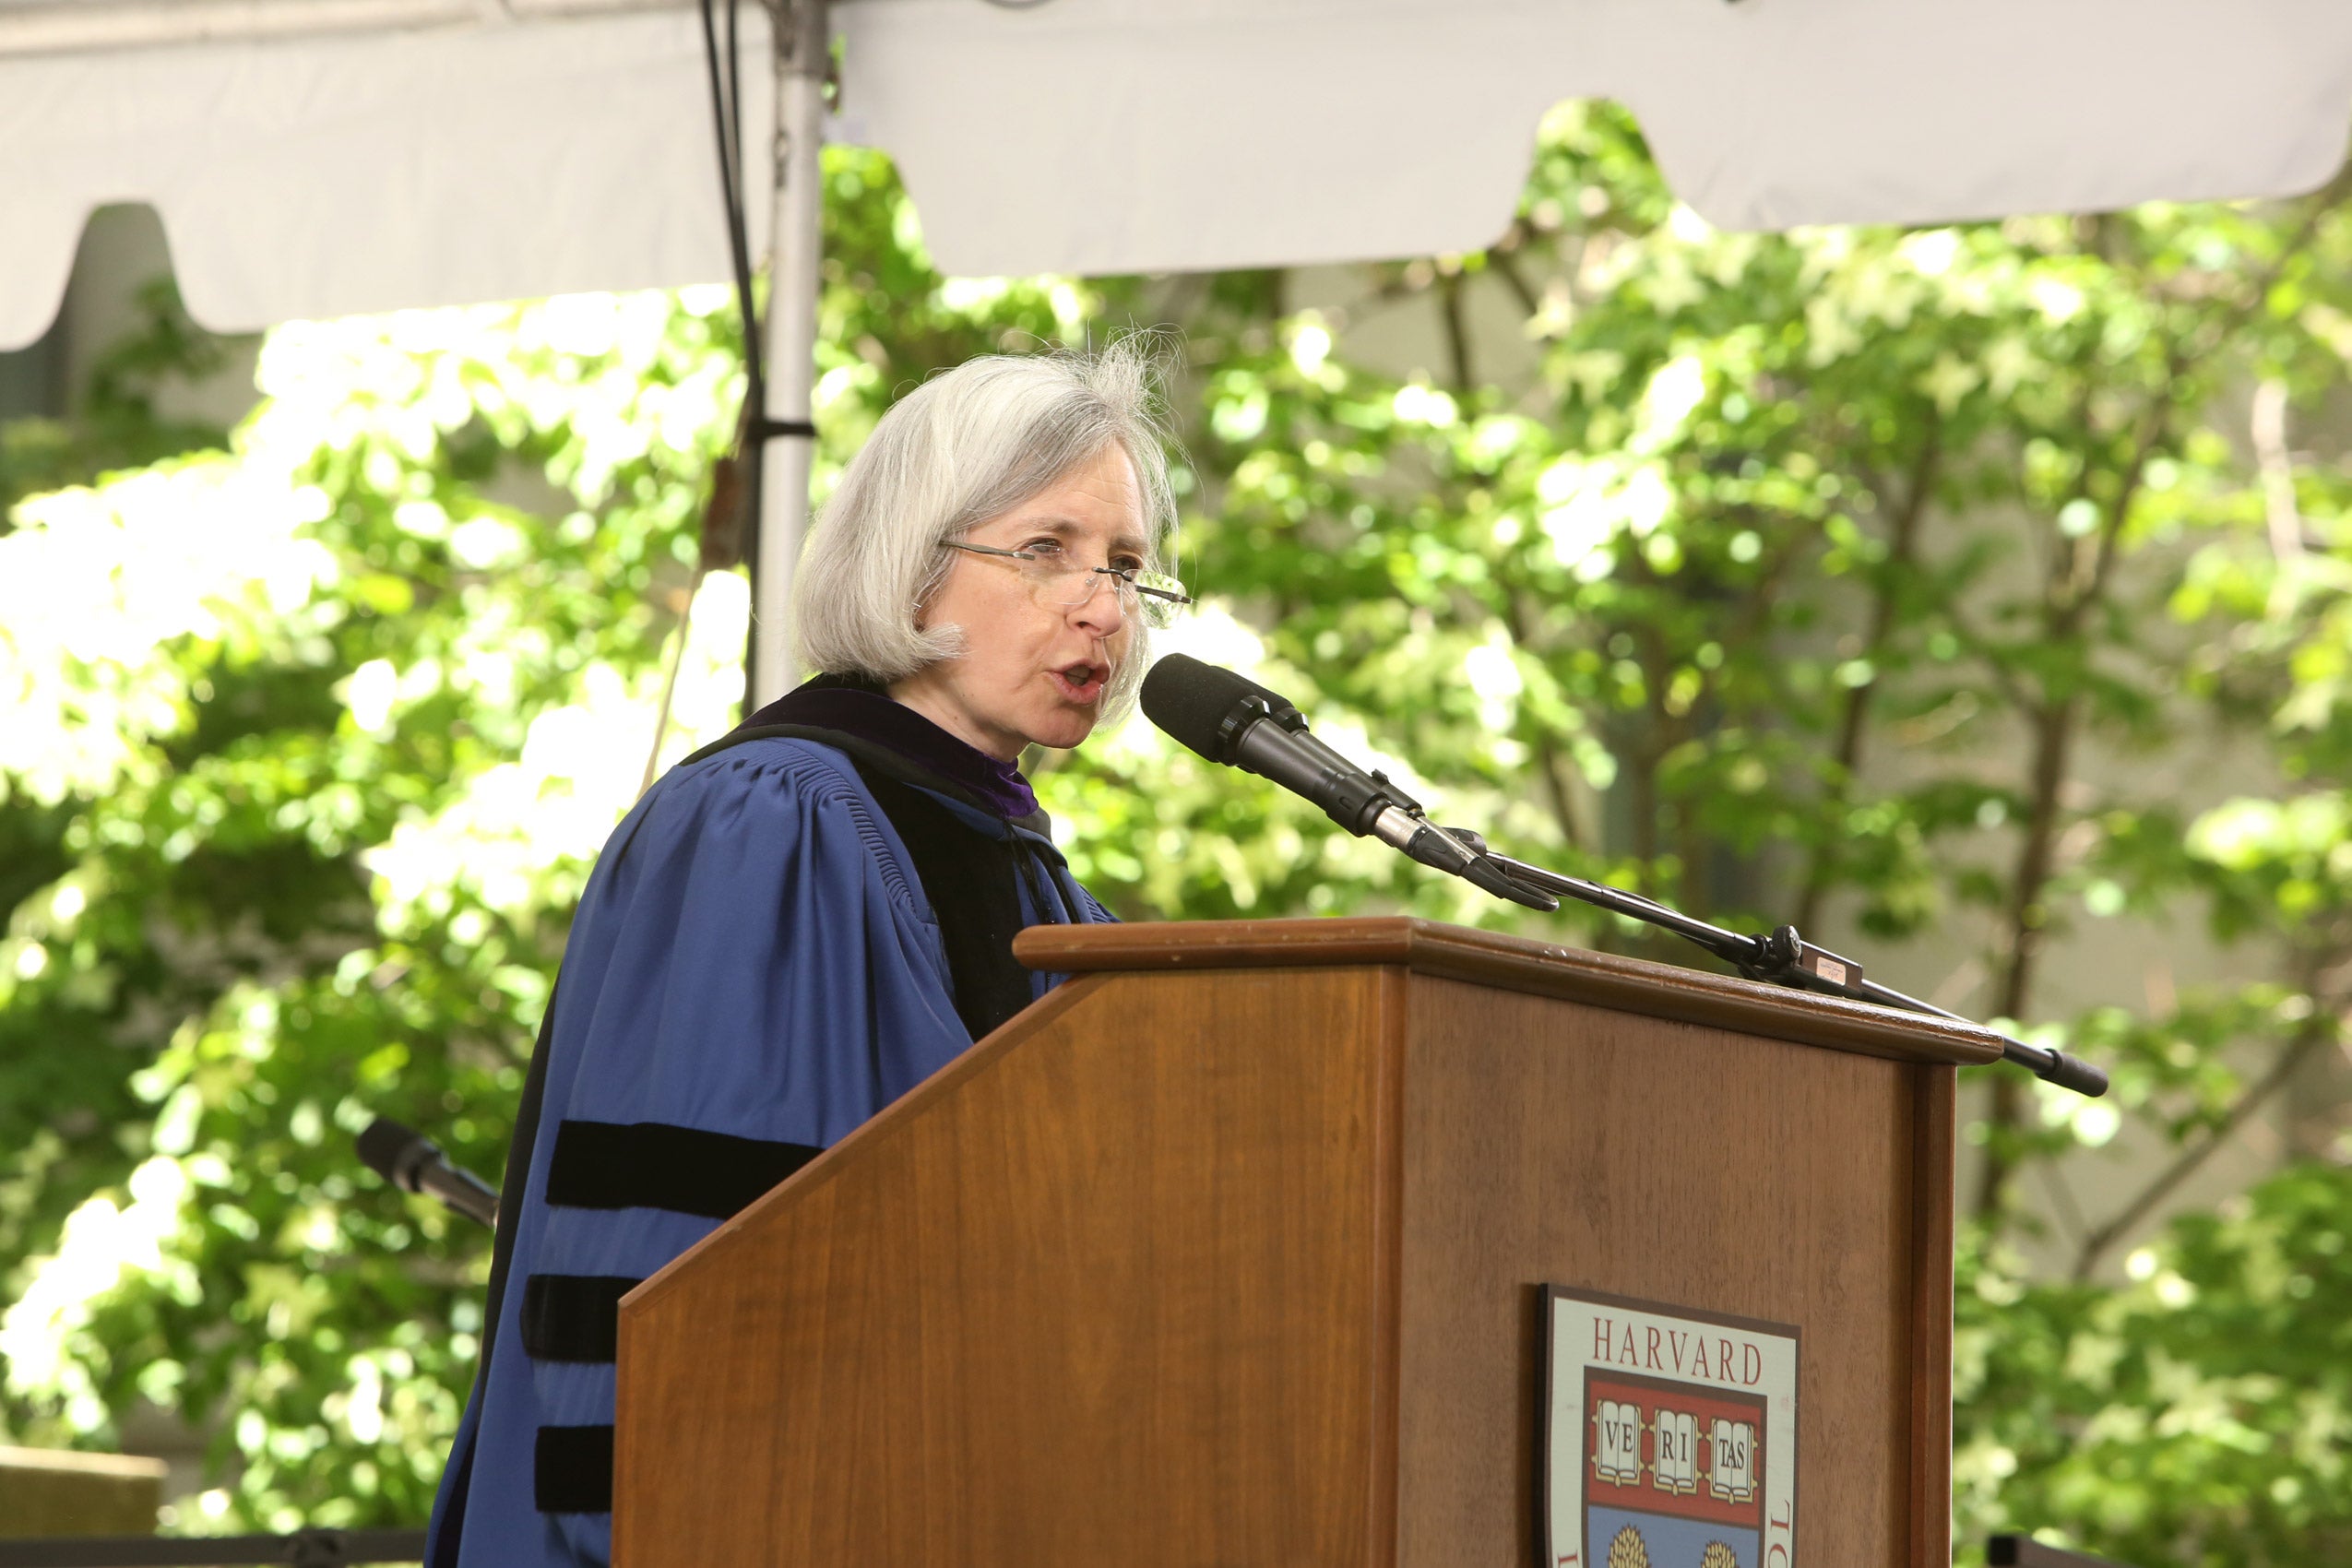 Martha Minow in ceremony robes speaking at podium